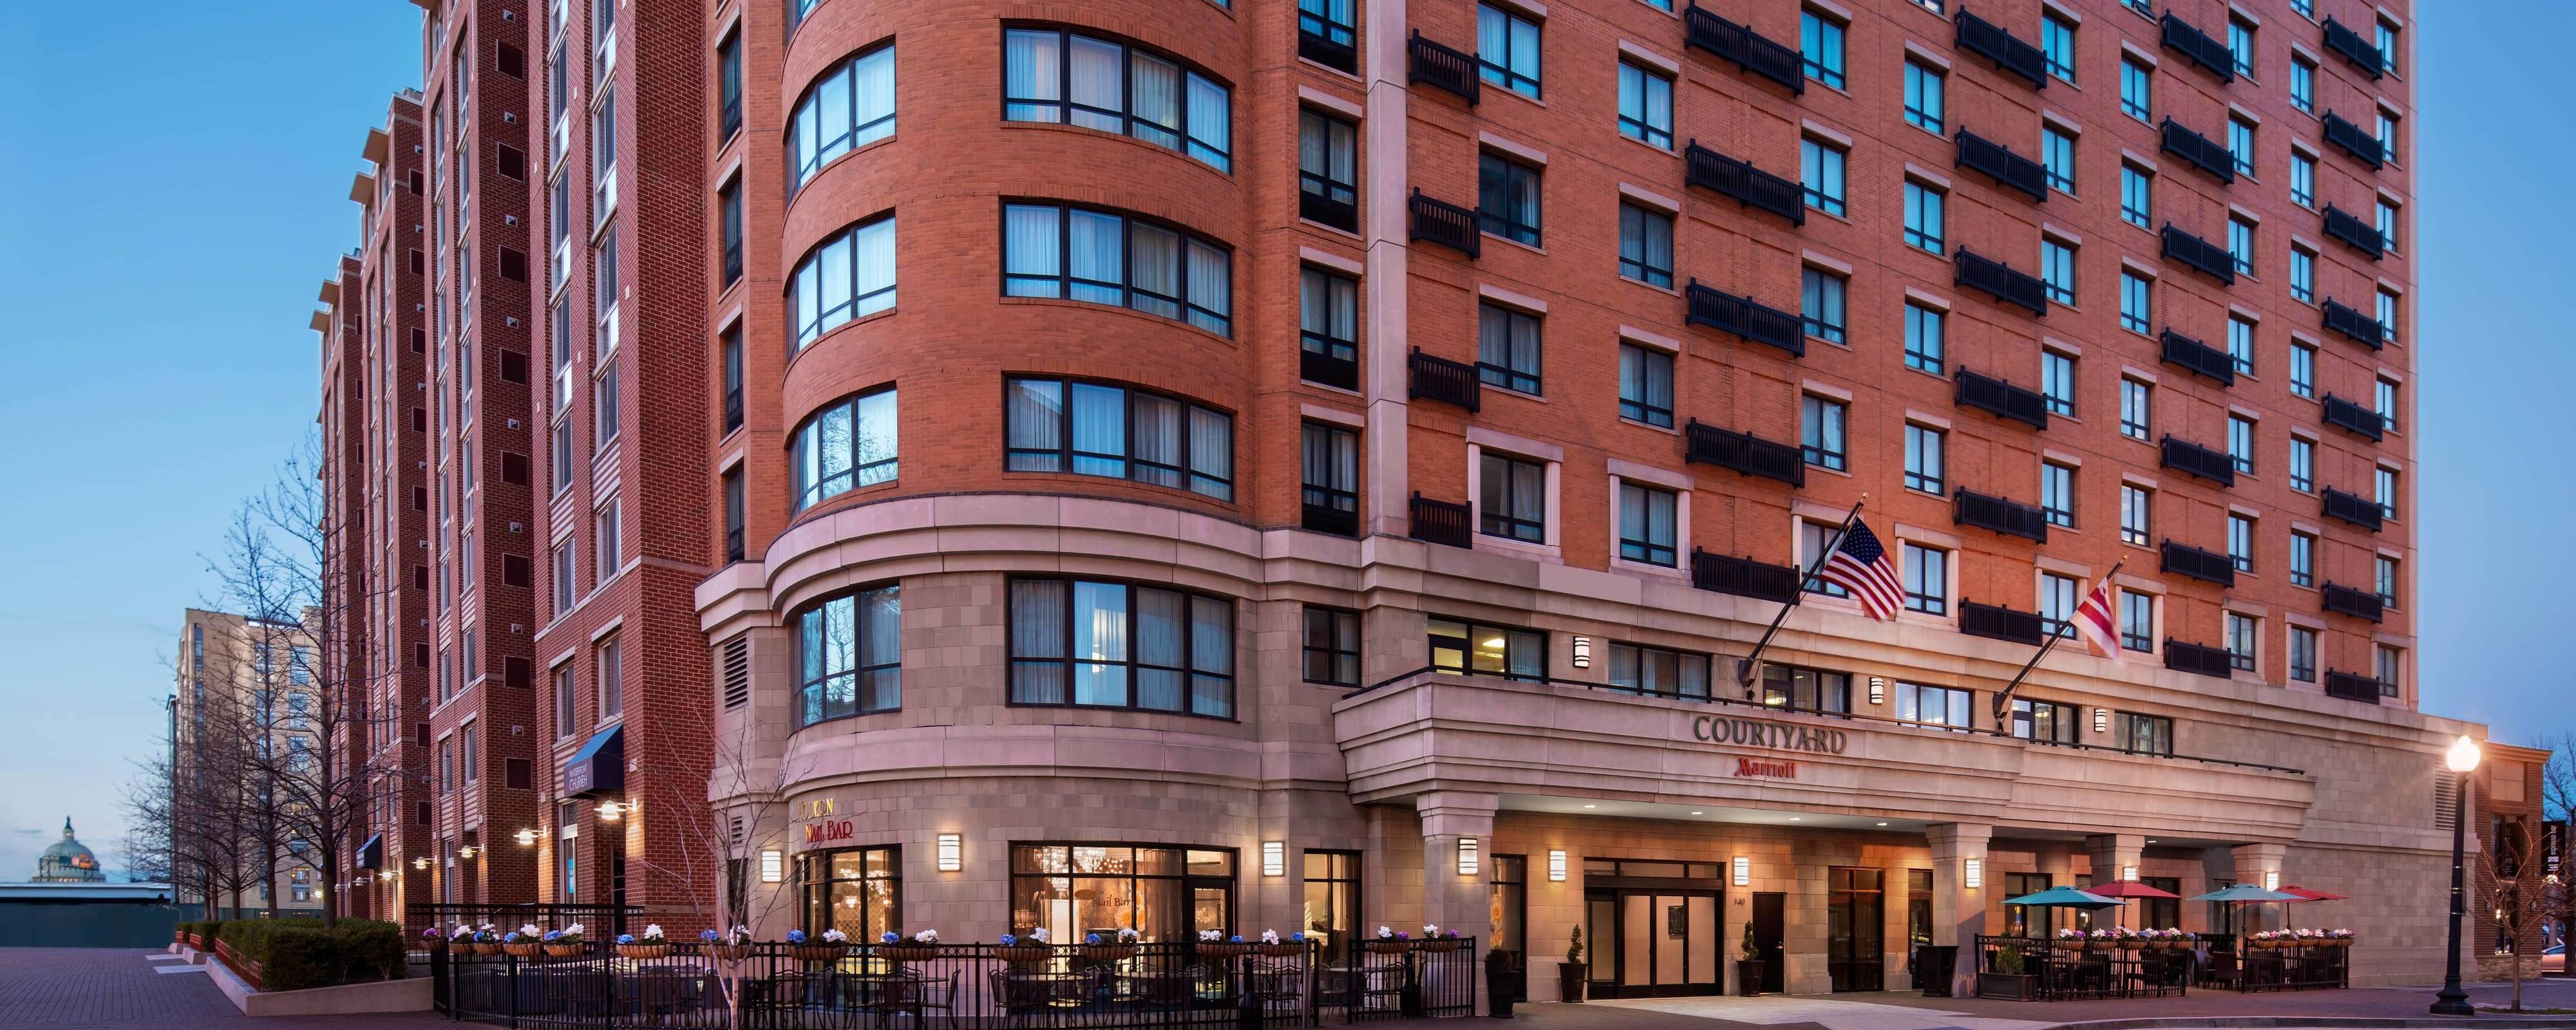 Hilton Hotels Near Washington Dc Metro - 53 Wedding Ideas You have